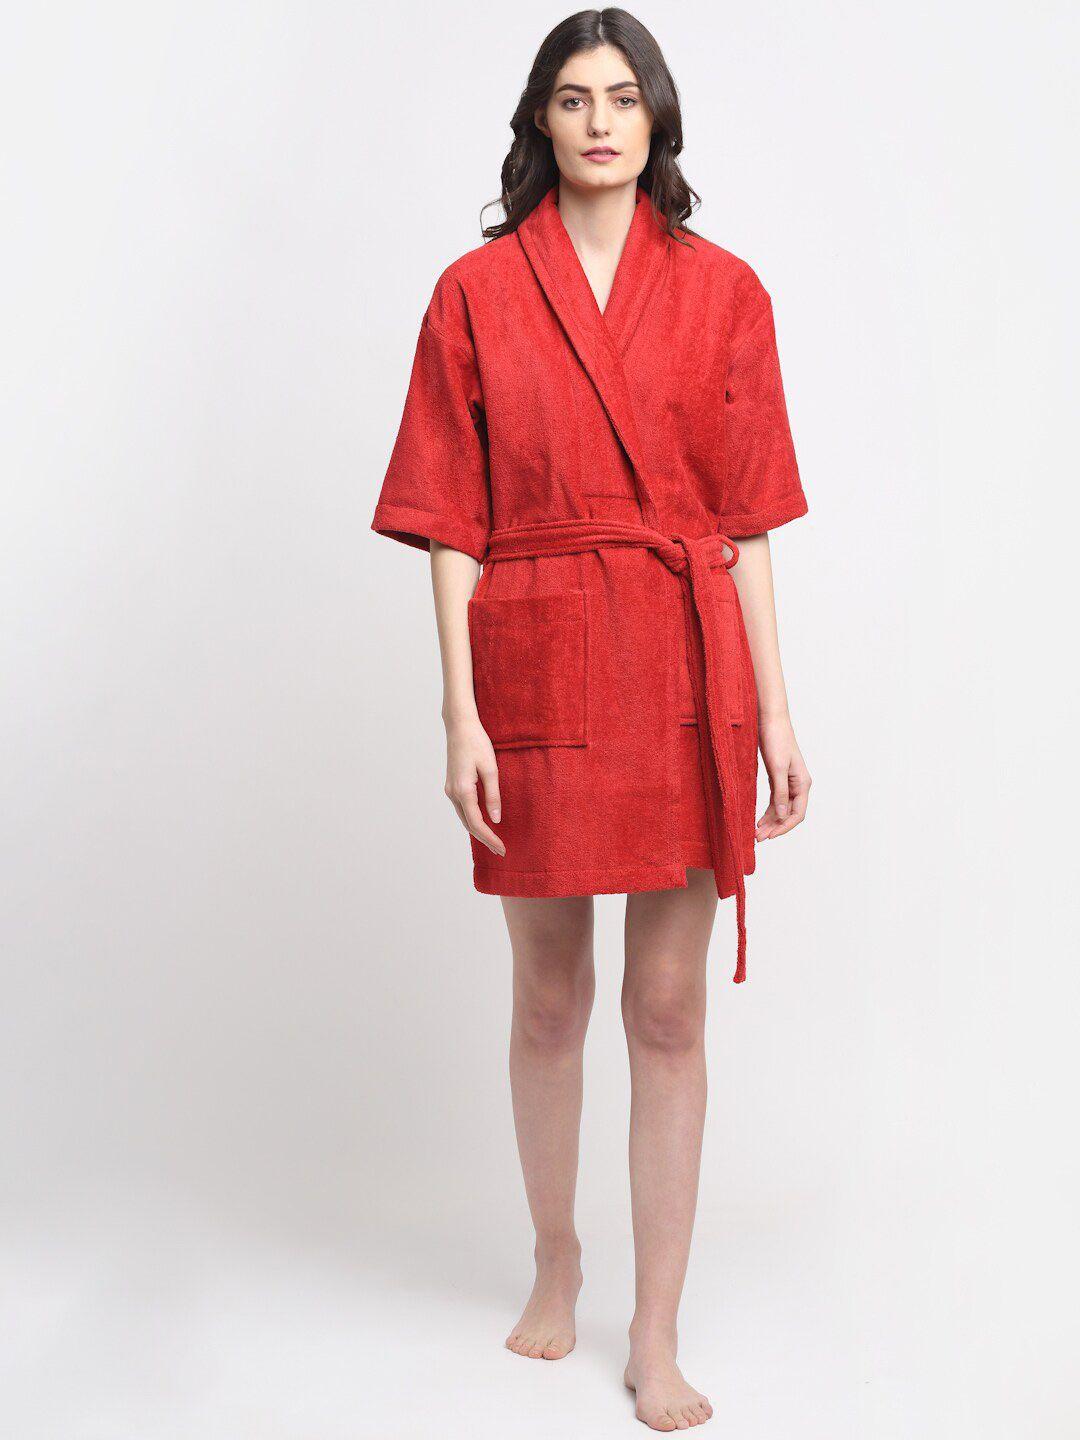 creeva red solid bath robe